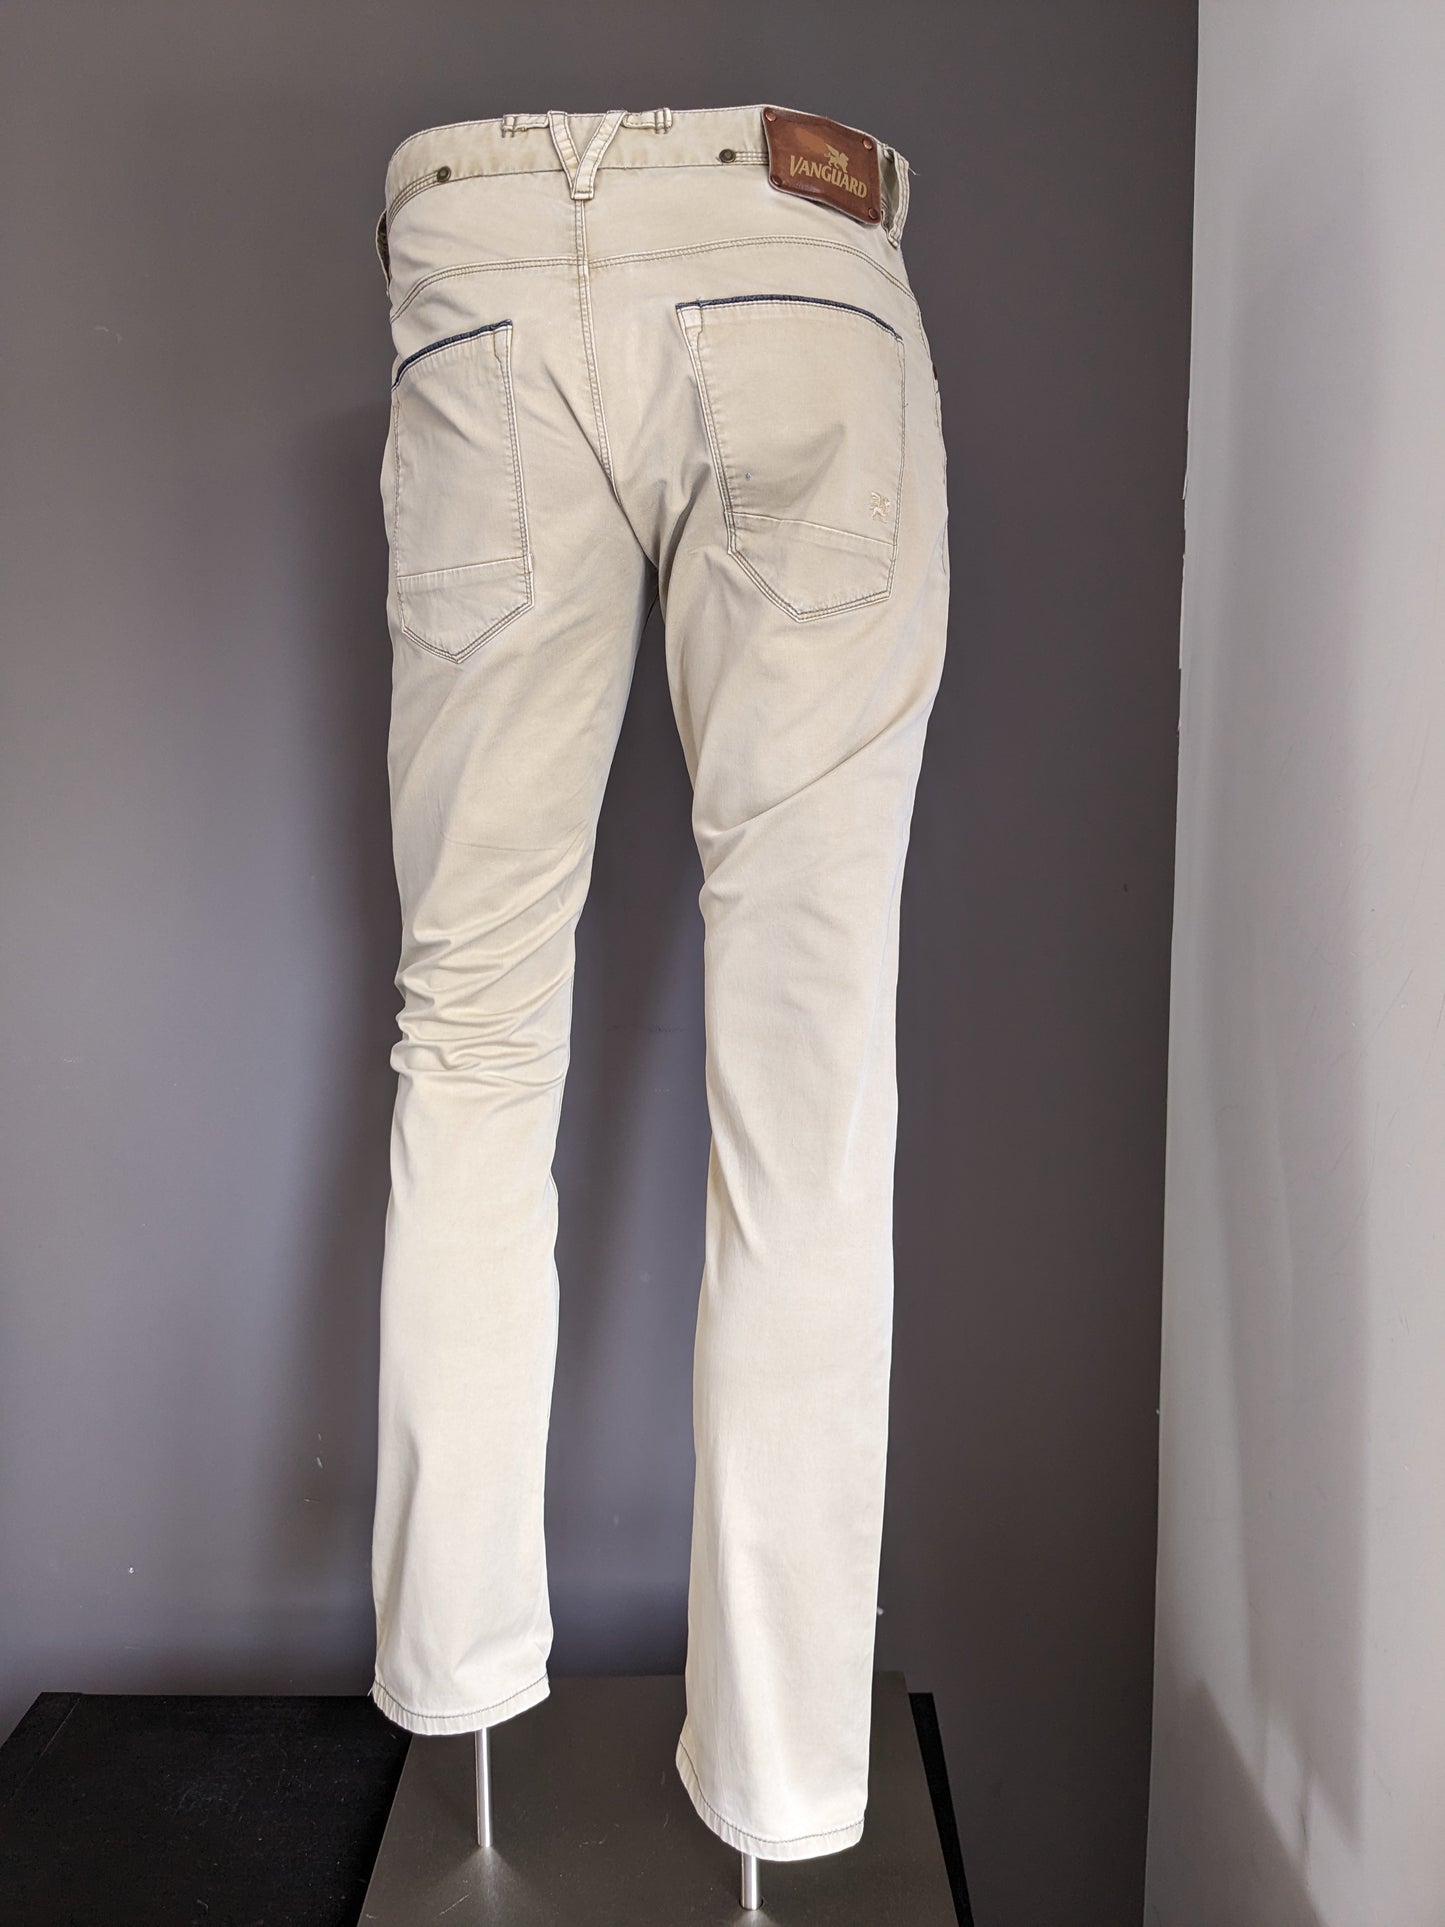 Pantalones de vanguardia. Color beige. Tamaño W31 - L32.